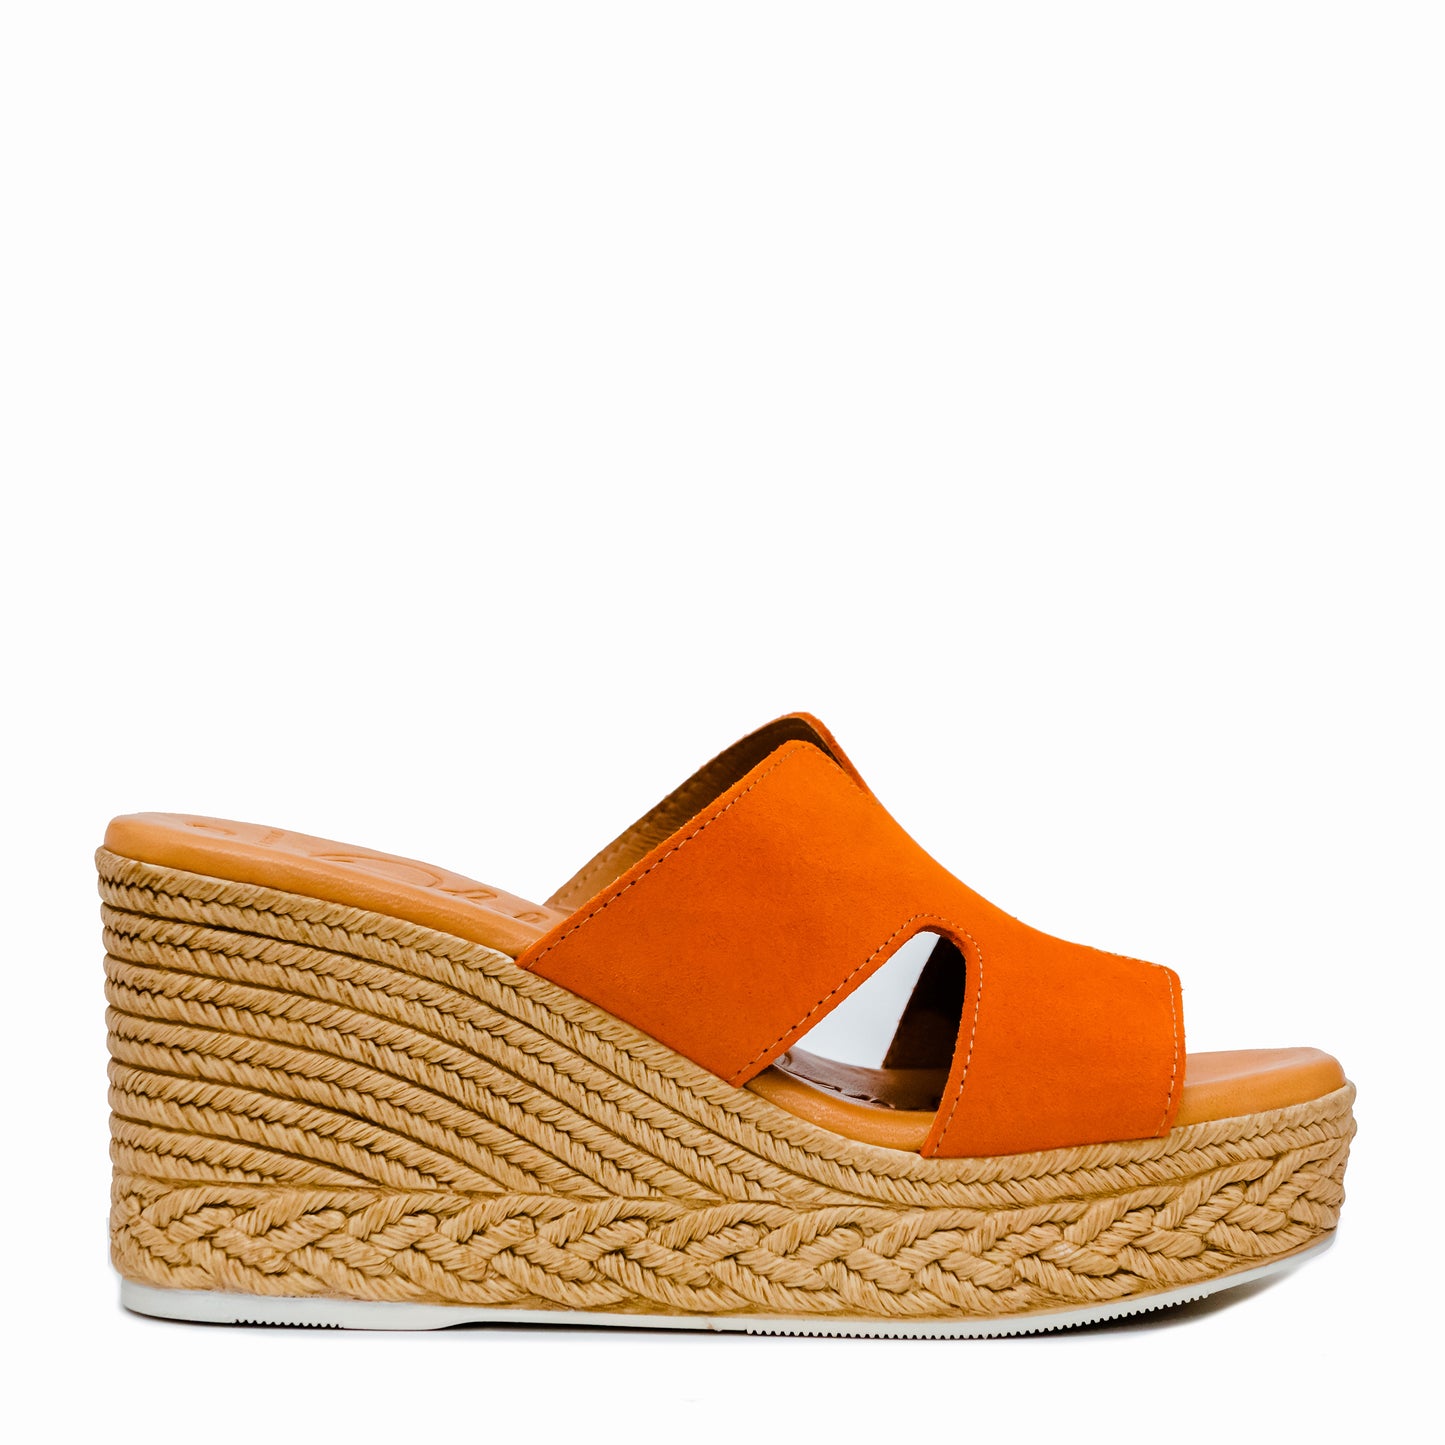 Oh My Sandals 5223 Orange Suede Mules/Wedge Sandals